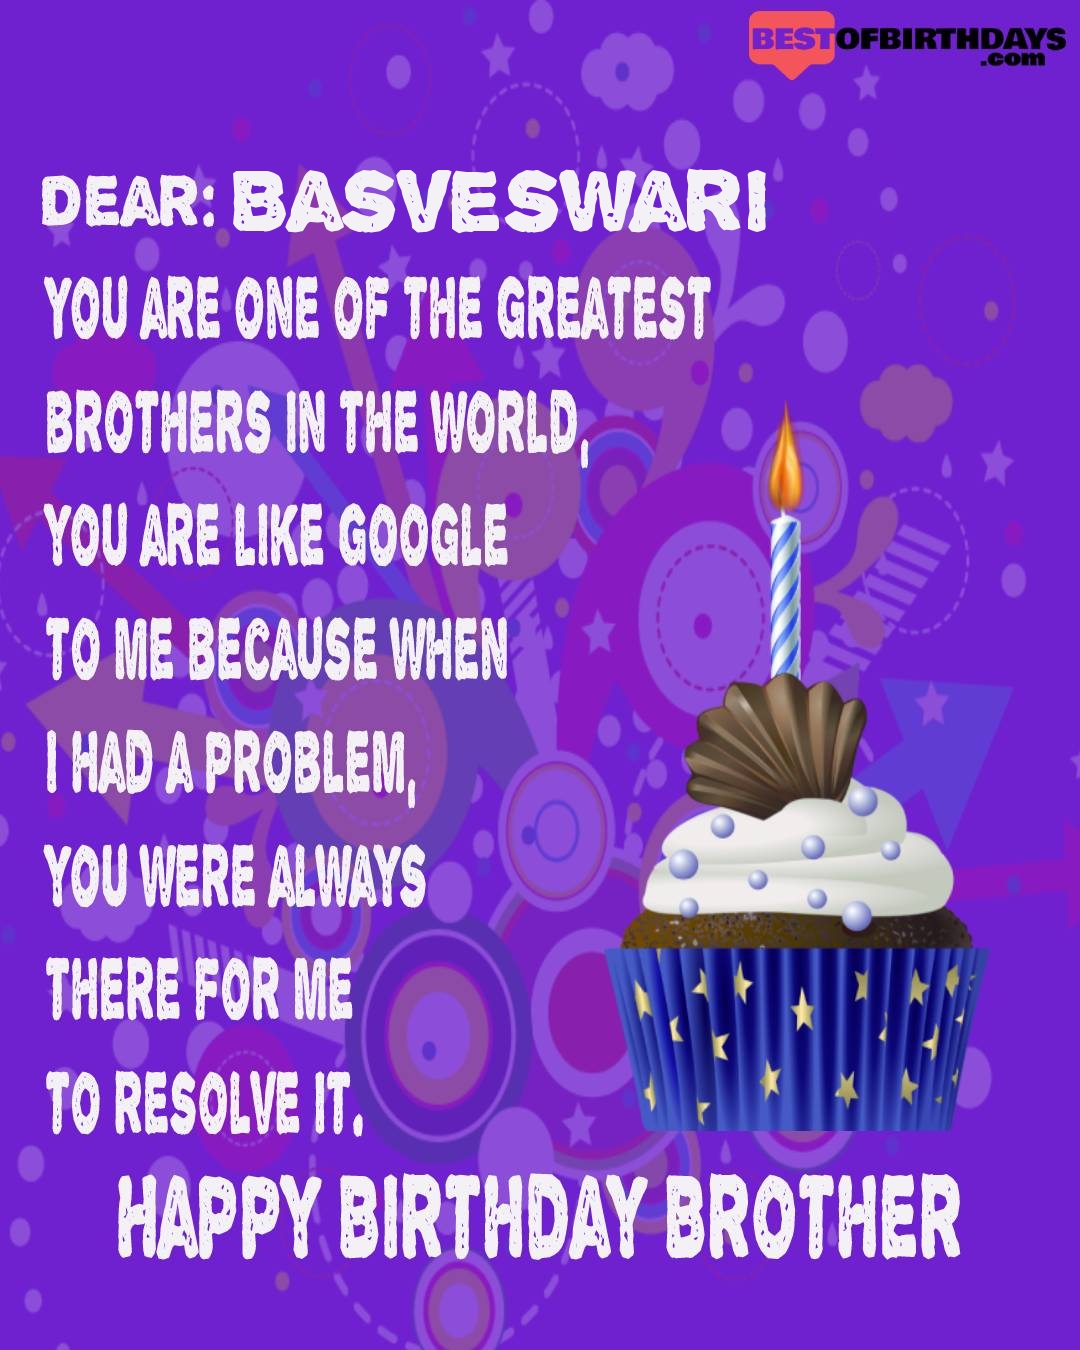 Happy birthday basveswari bhai brother bro